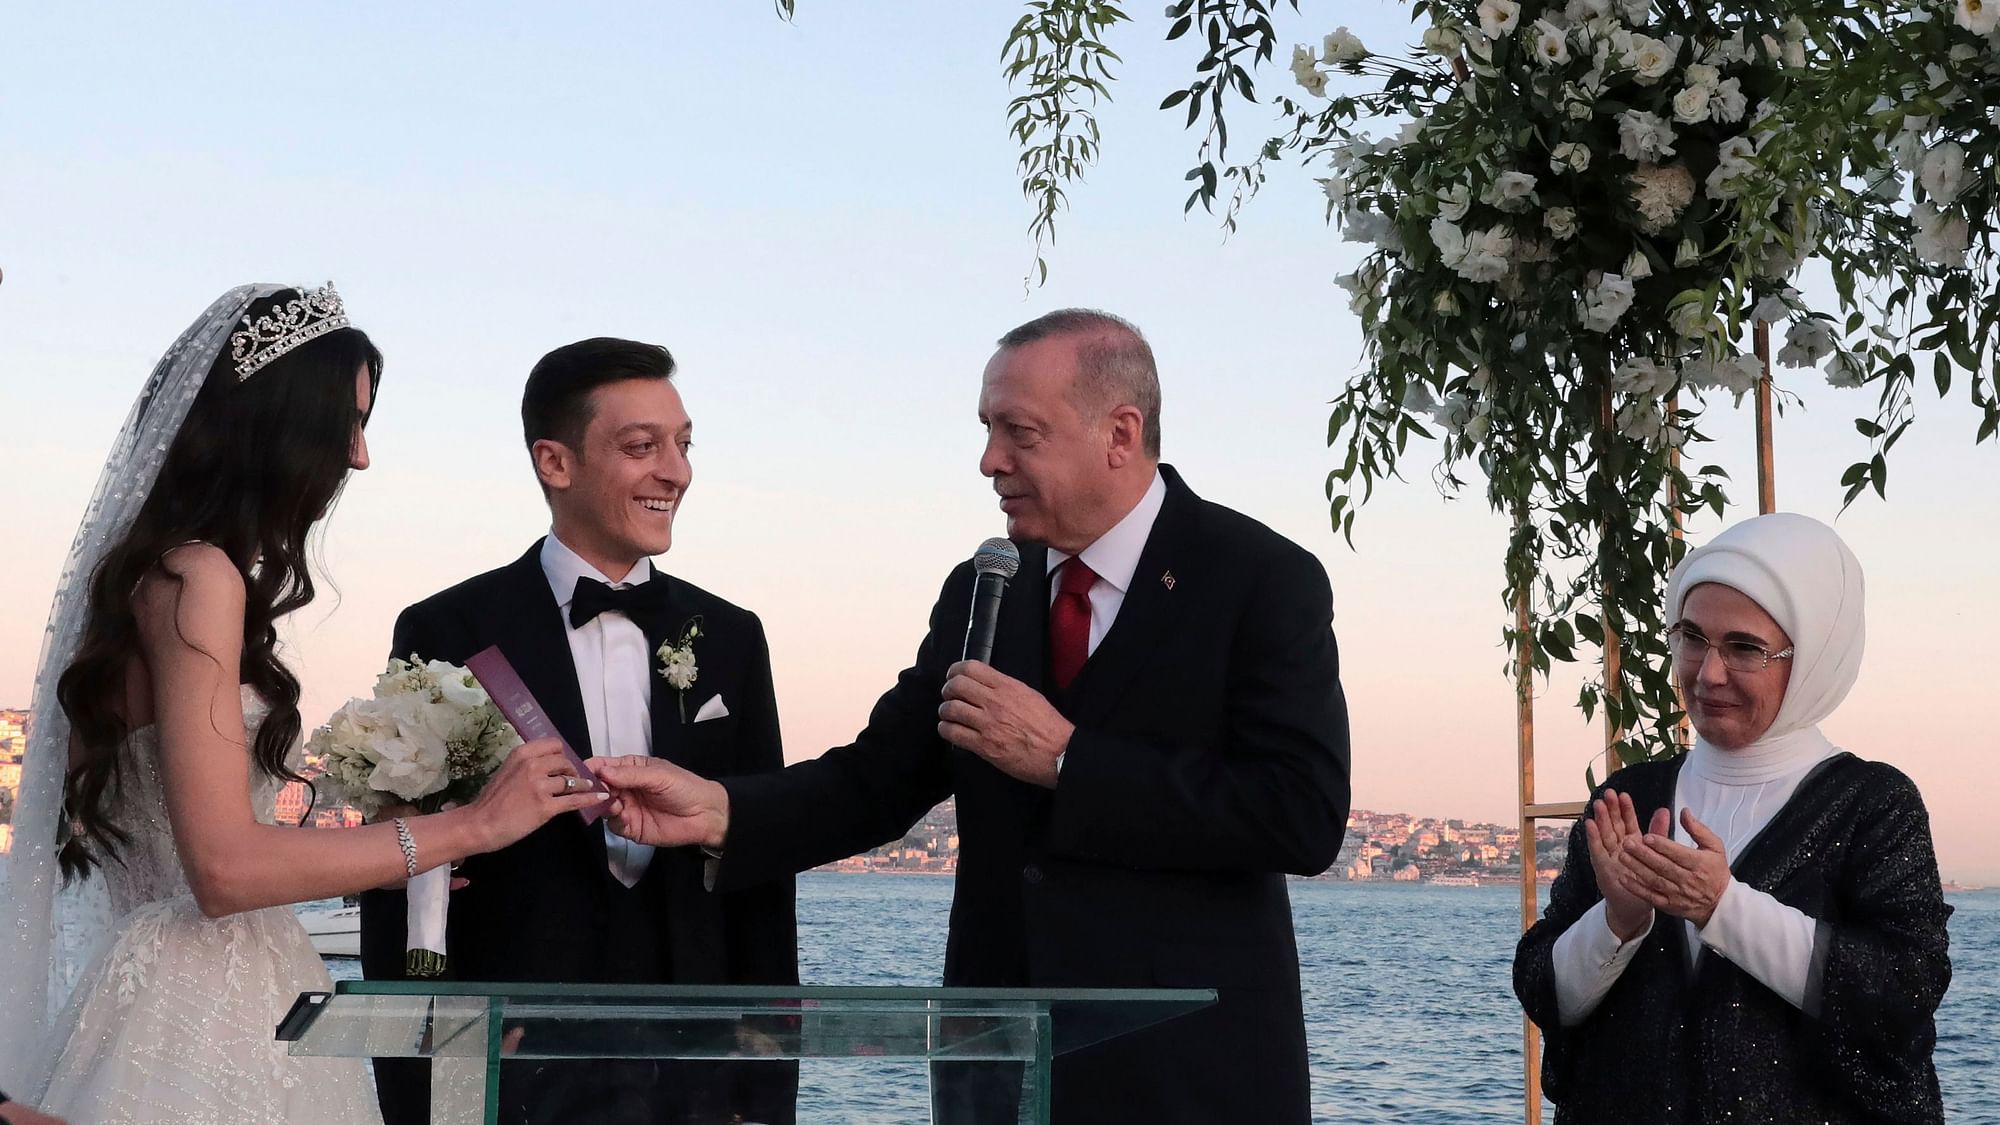 Turkey’s President Recep Tayyip Erdogan speaks to Turkish-German soccer player Mesut Ozil and his wife Amine Gulse during a wedding ceremony.